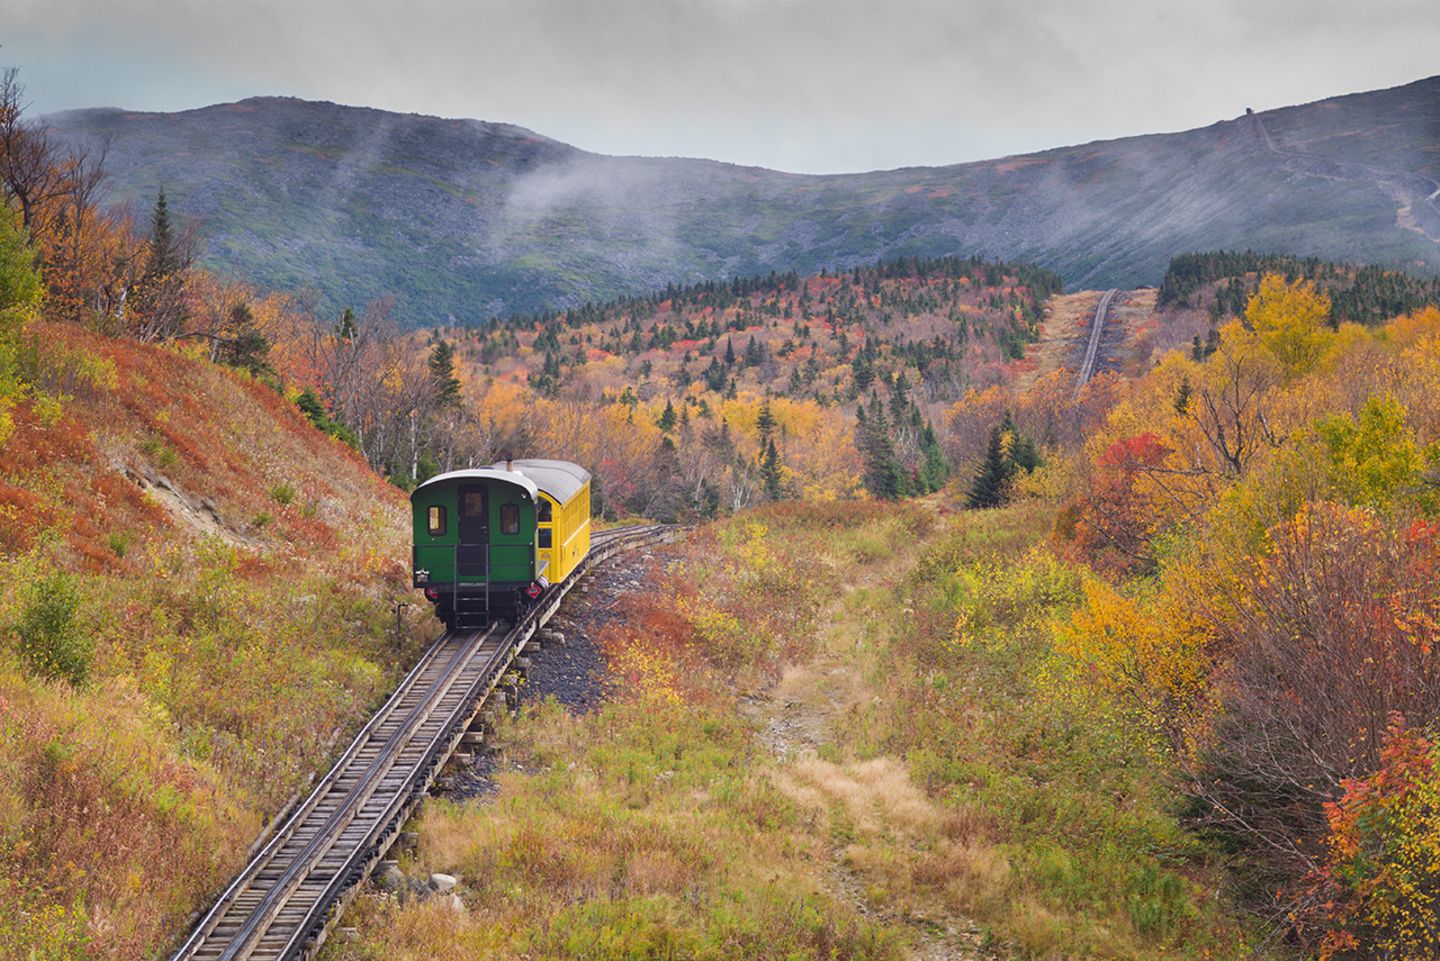 The Mount Washington Cog Railway in New Hampshire